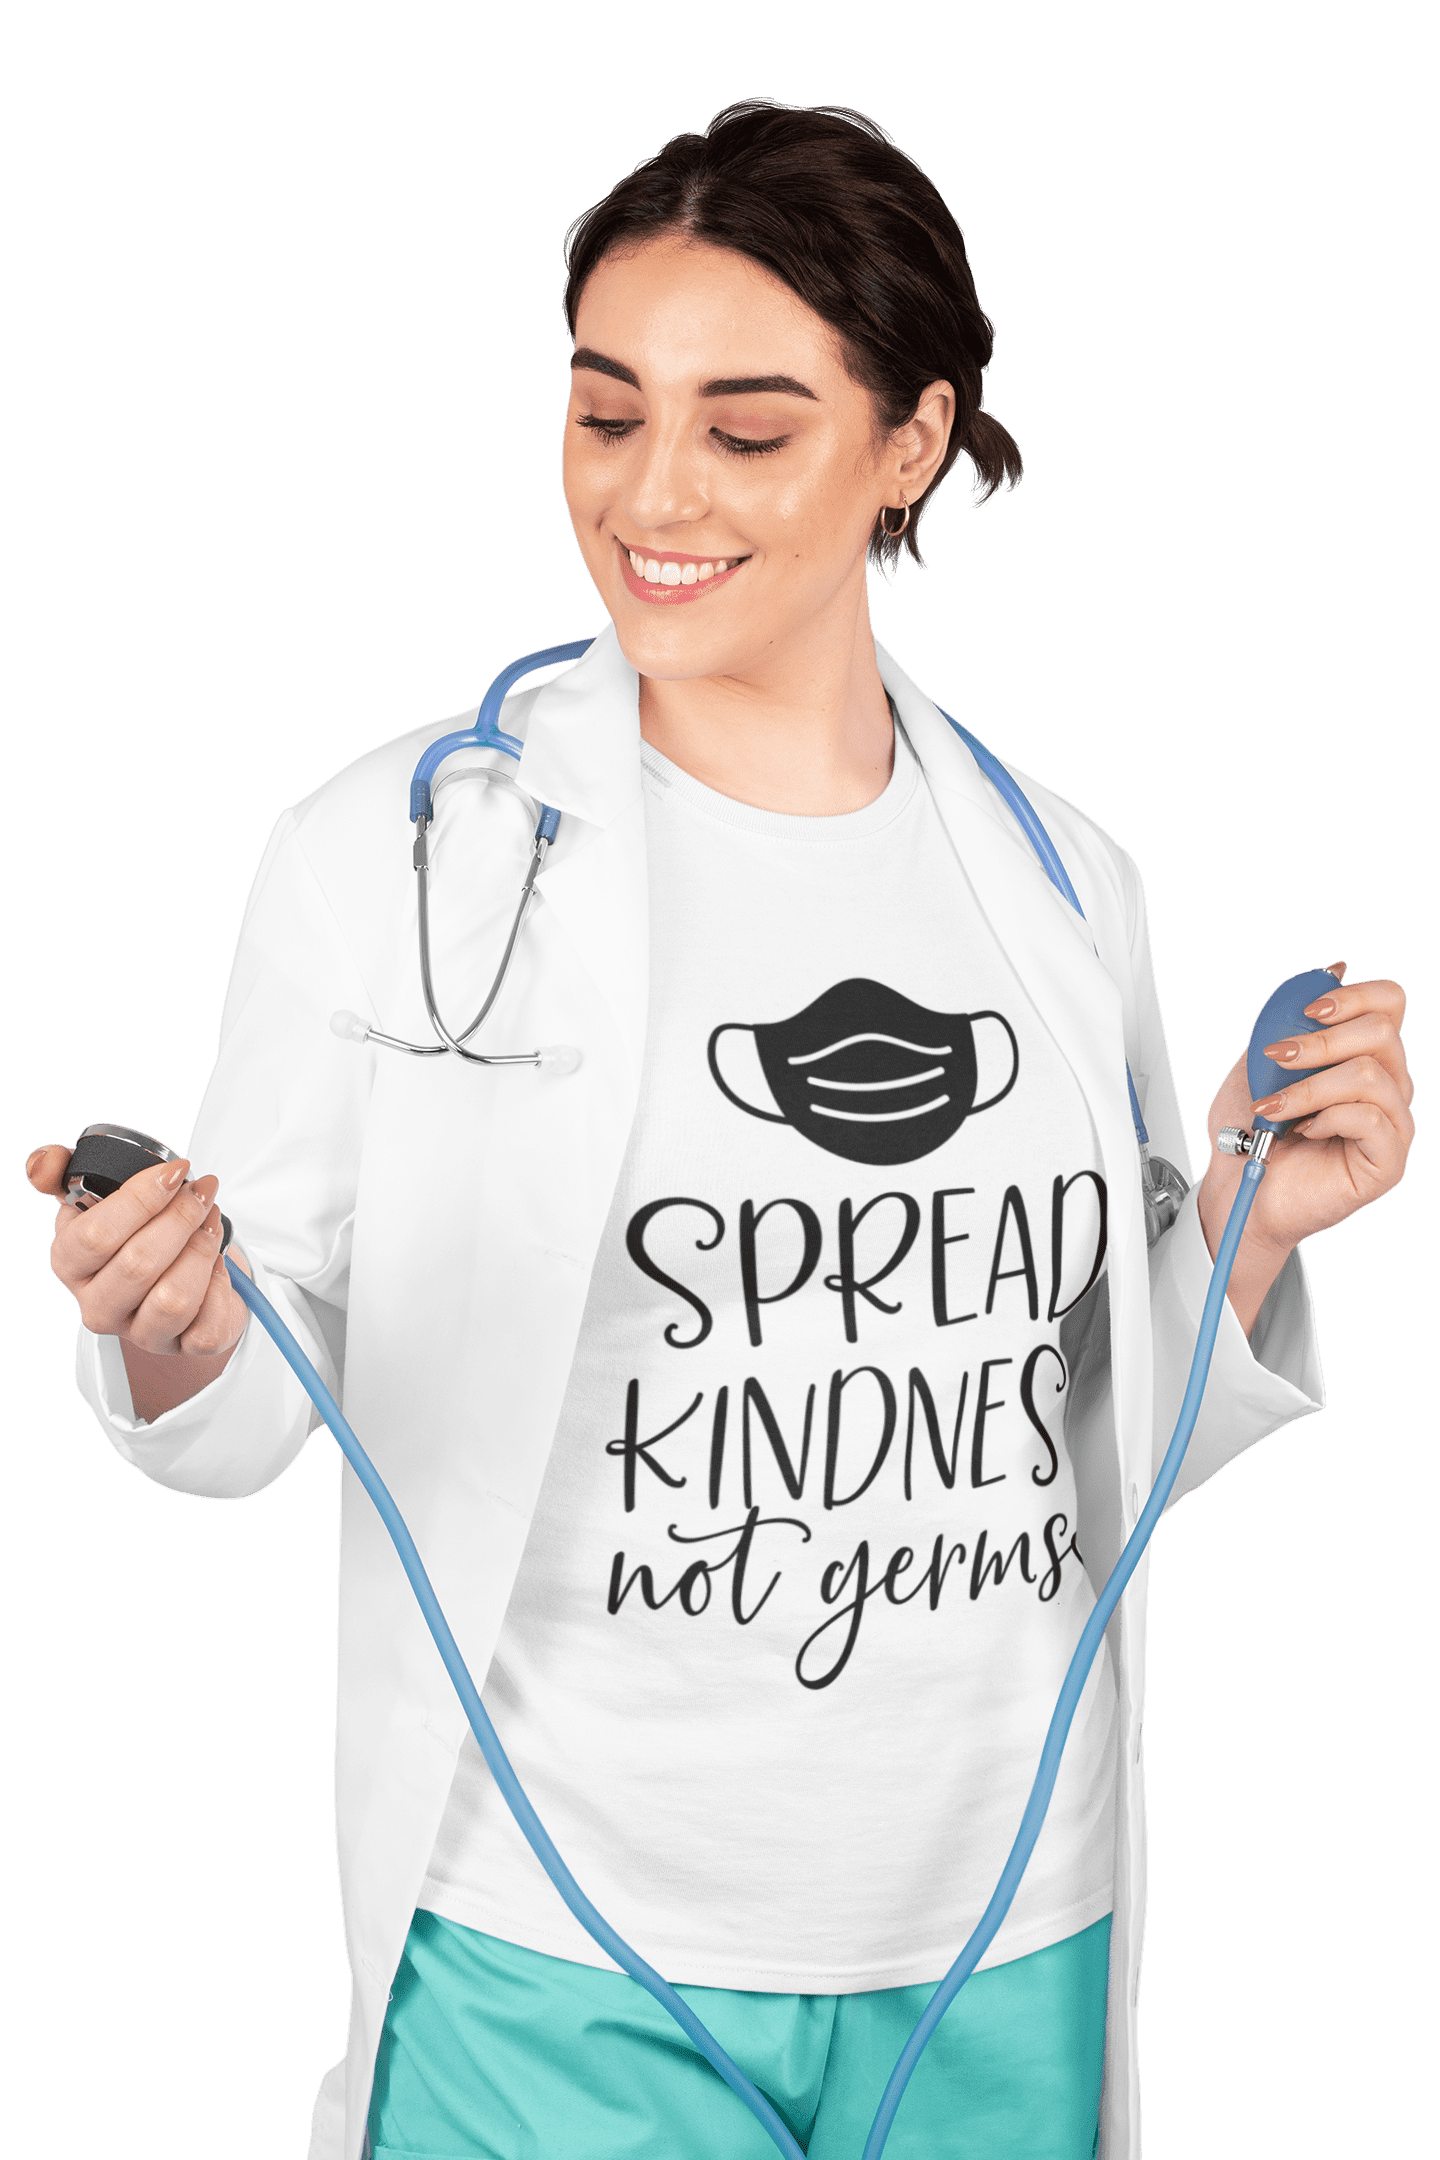 kaos spread kindness not germs